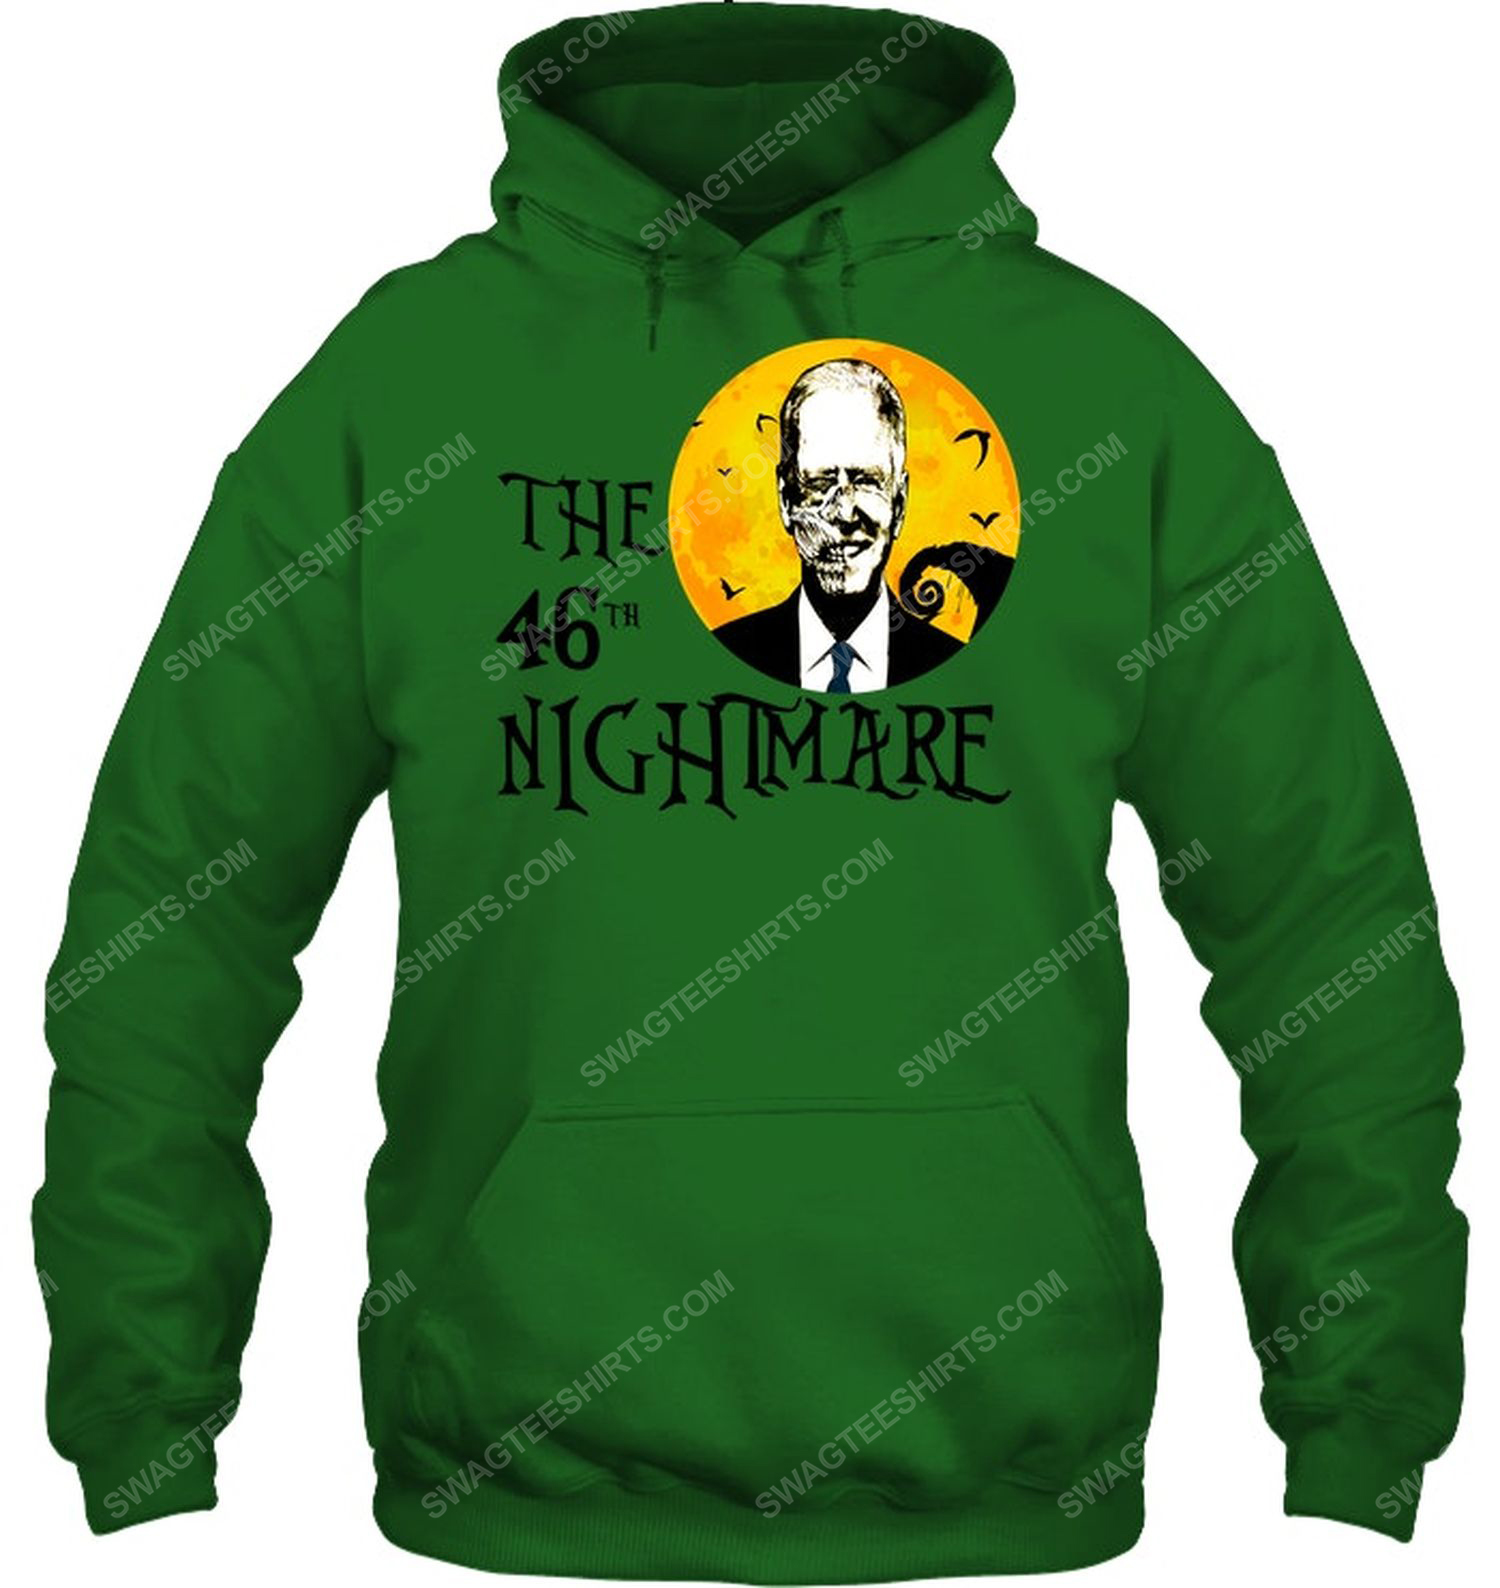 Joe biden the 46th nightmare halloween political hoodie